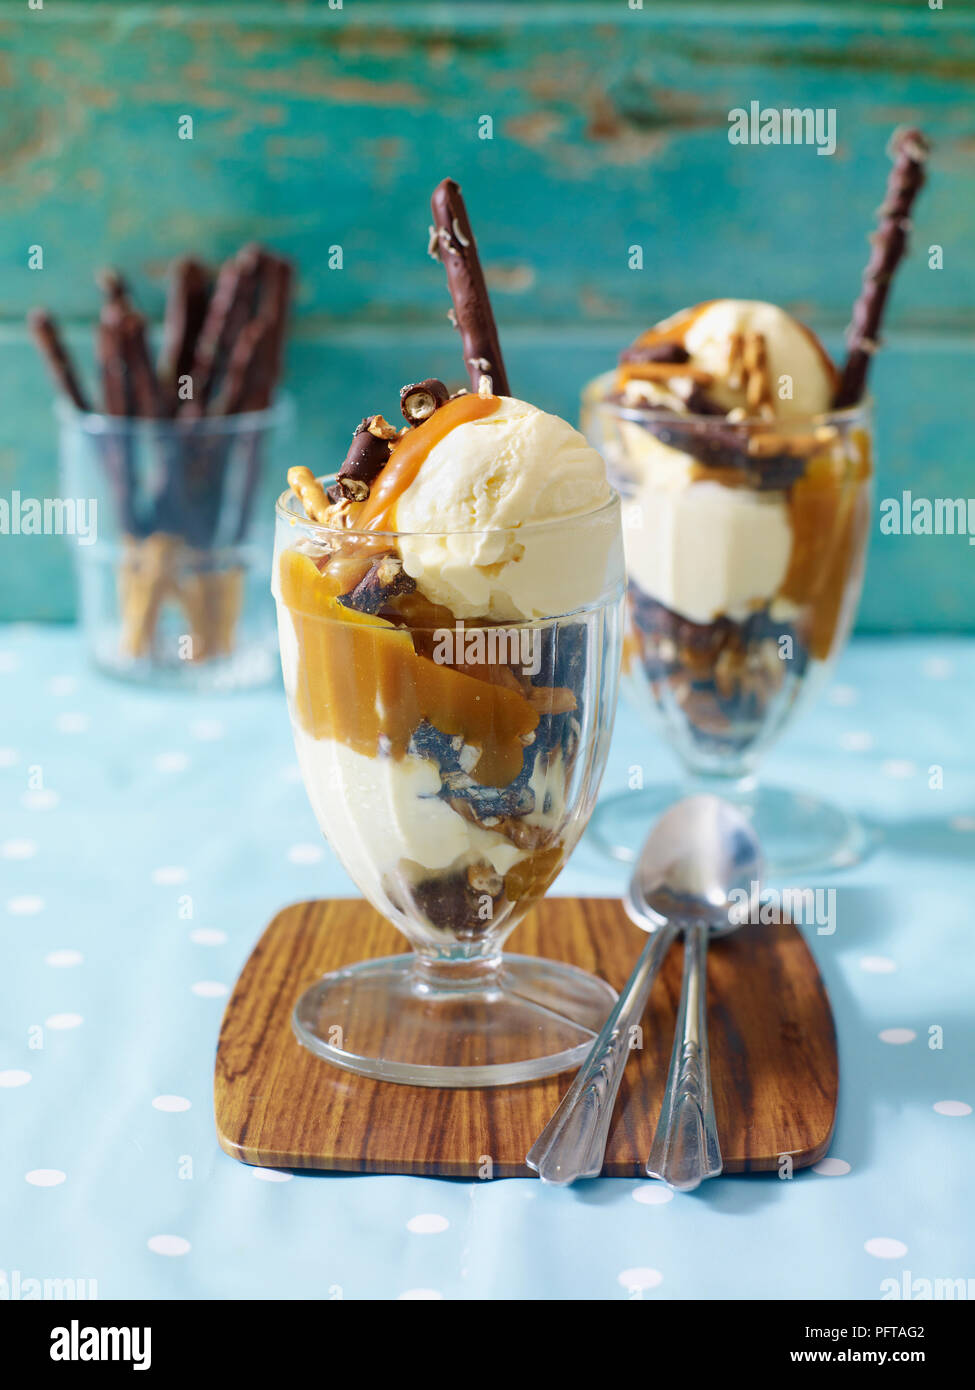 Ice cream sundae with caramel sauce Stock Photo